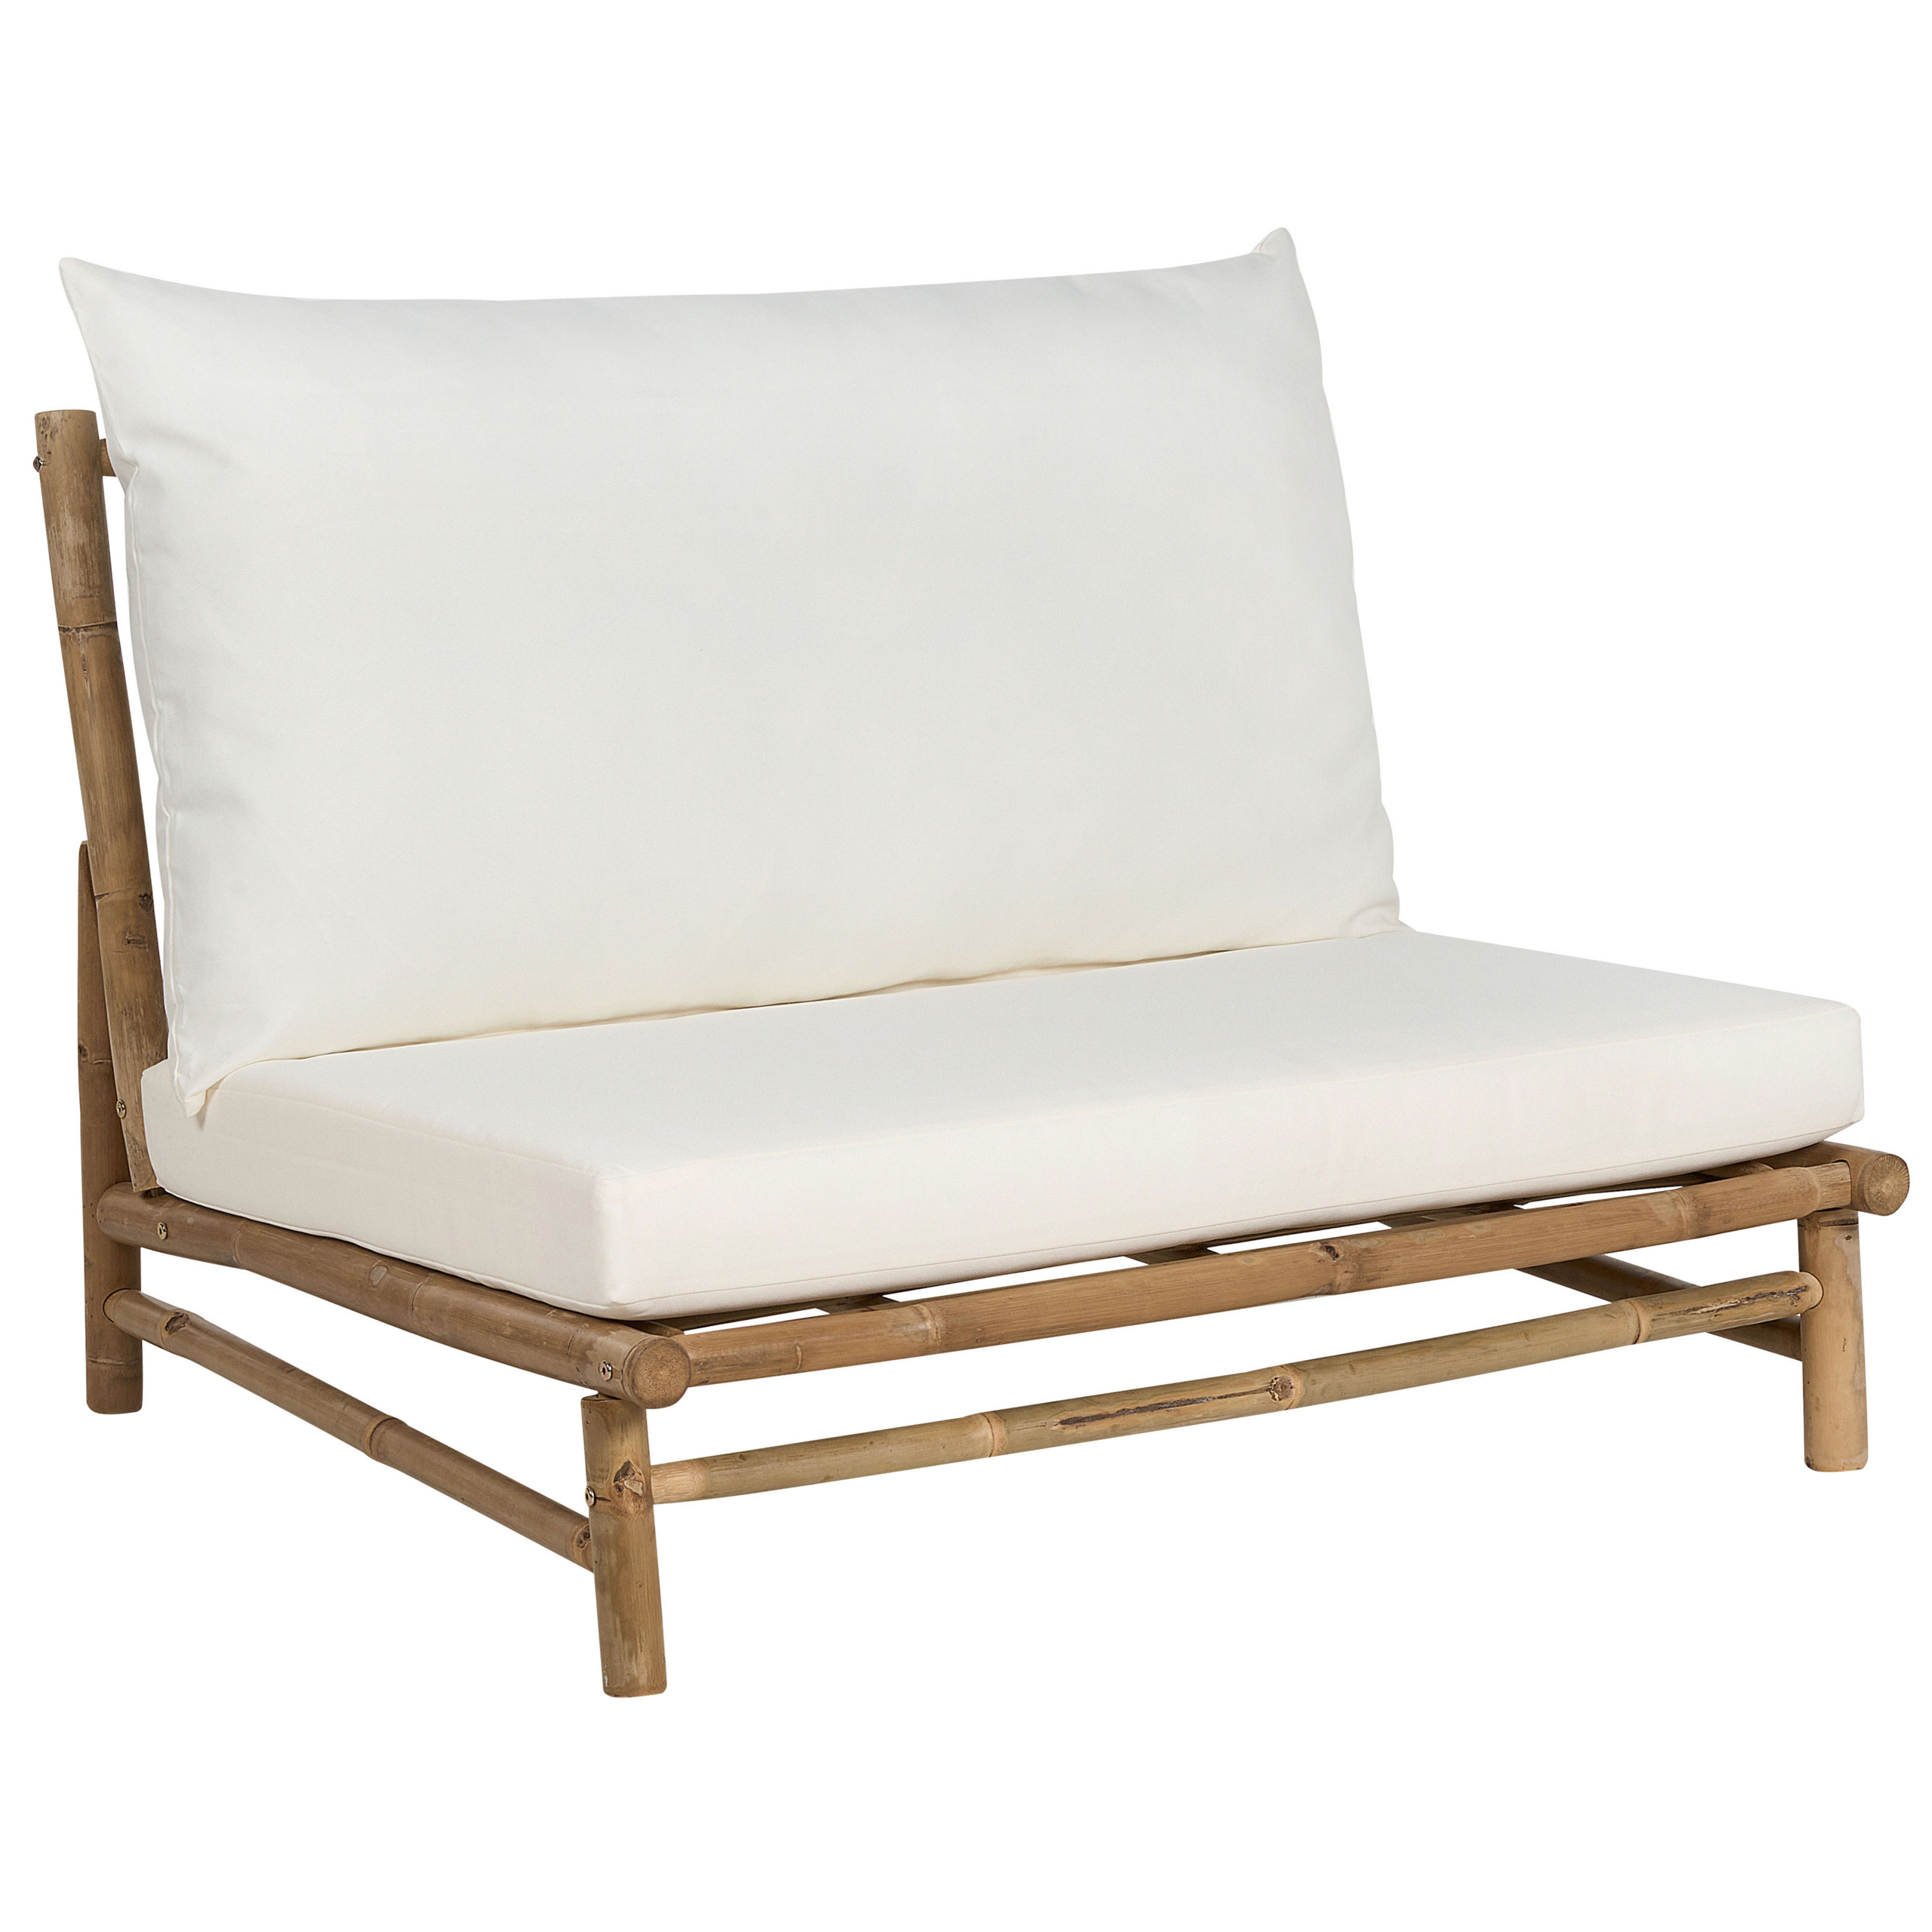 Bamboo bench light tone short feet and cushions broken white for garden salon-